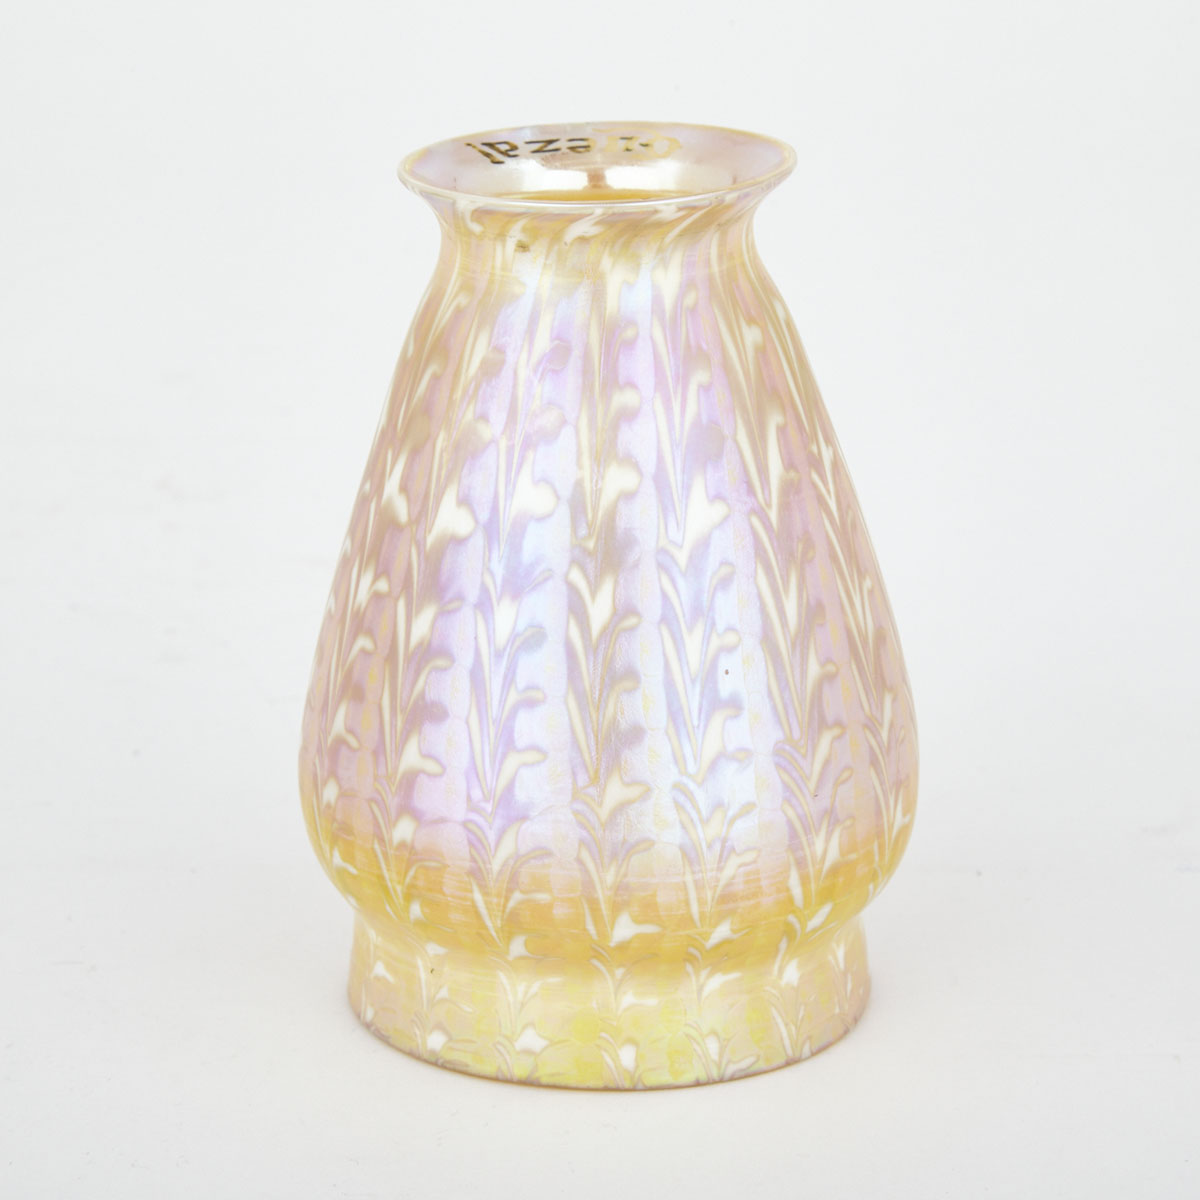 Quezal Iridescent Glass Shade, early 20th century 